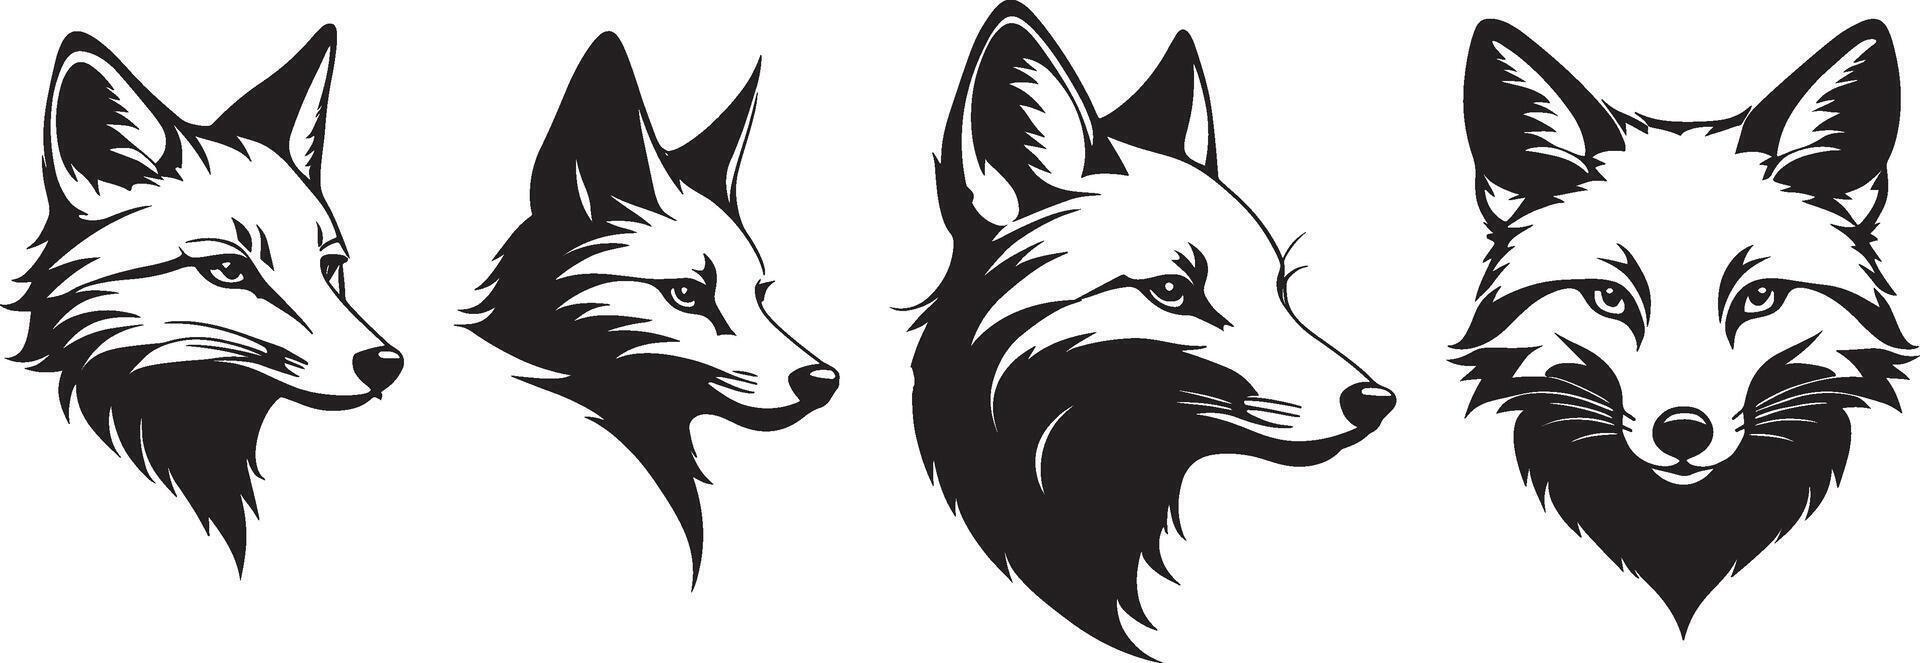 set of a fox head silhouette vector illustration